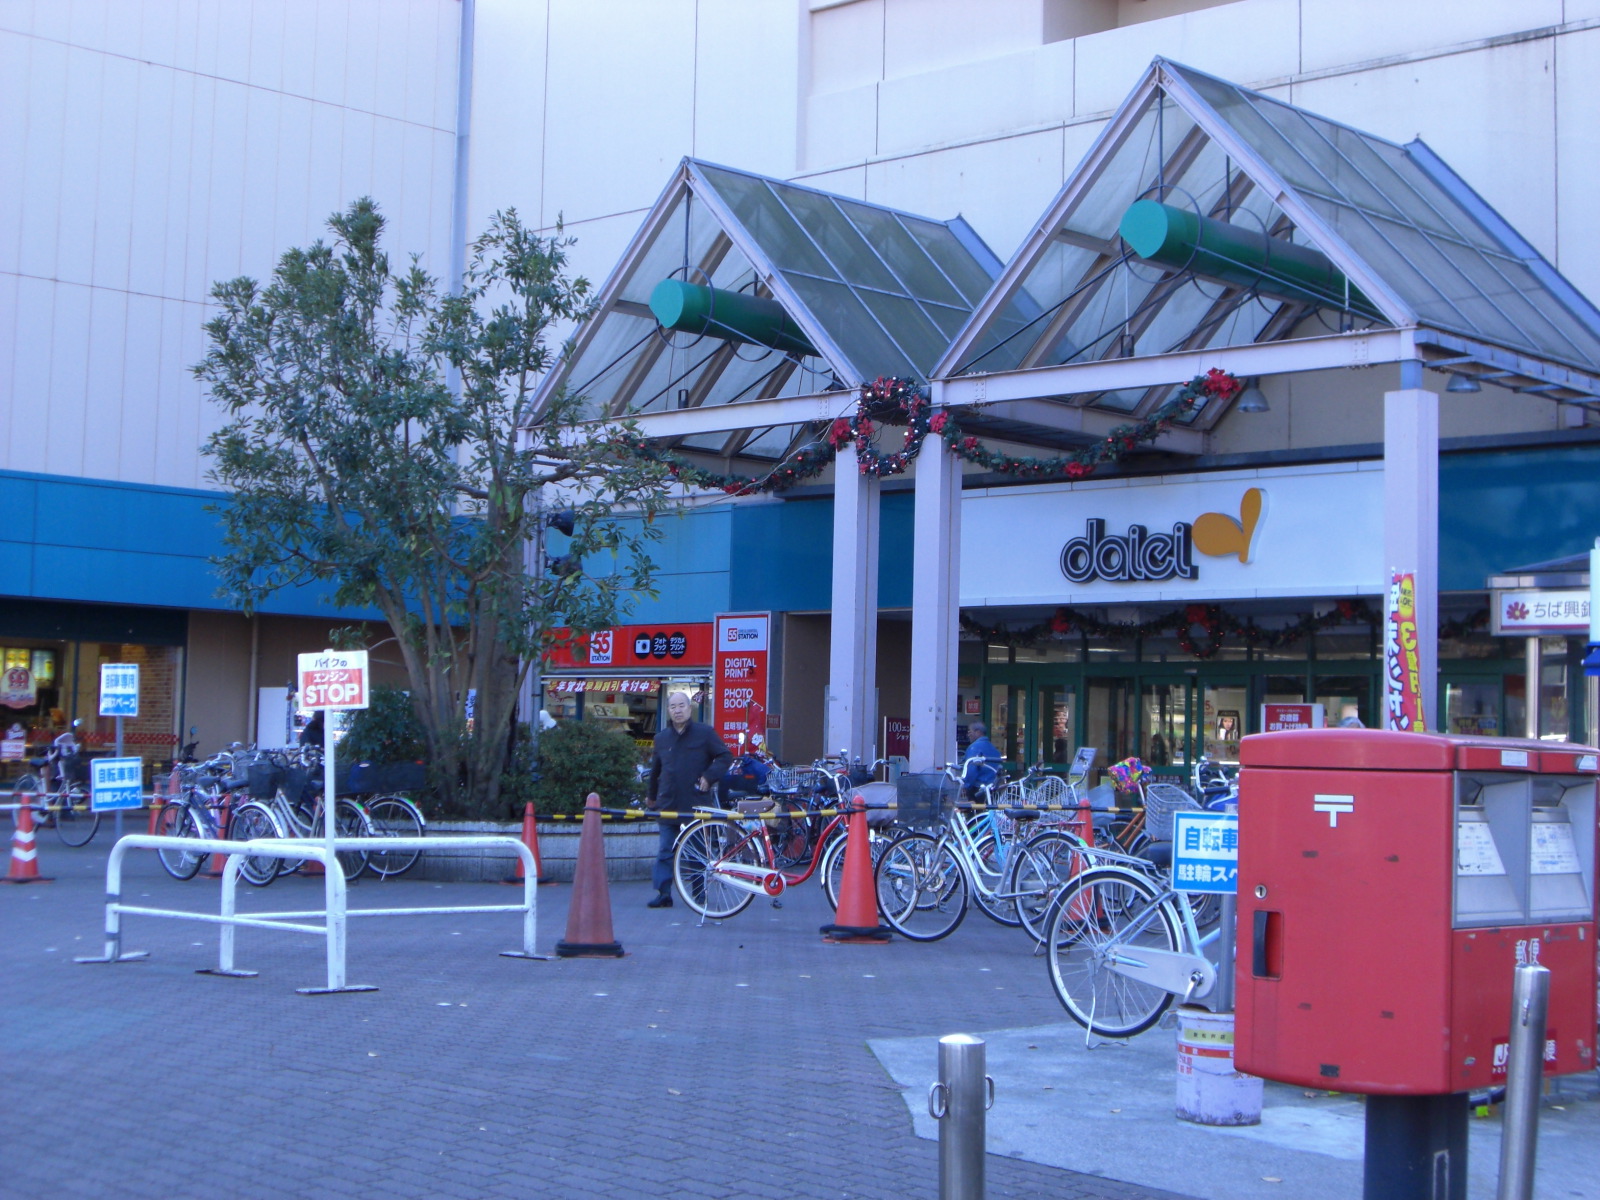 Supermarket. 532m to Daiei Matsudo store (Super)